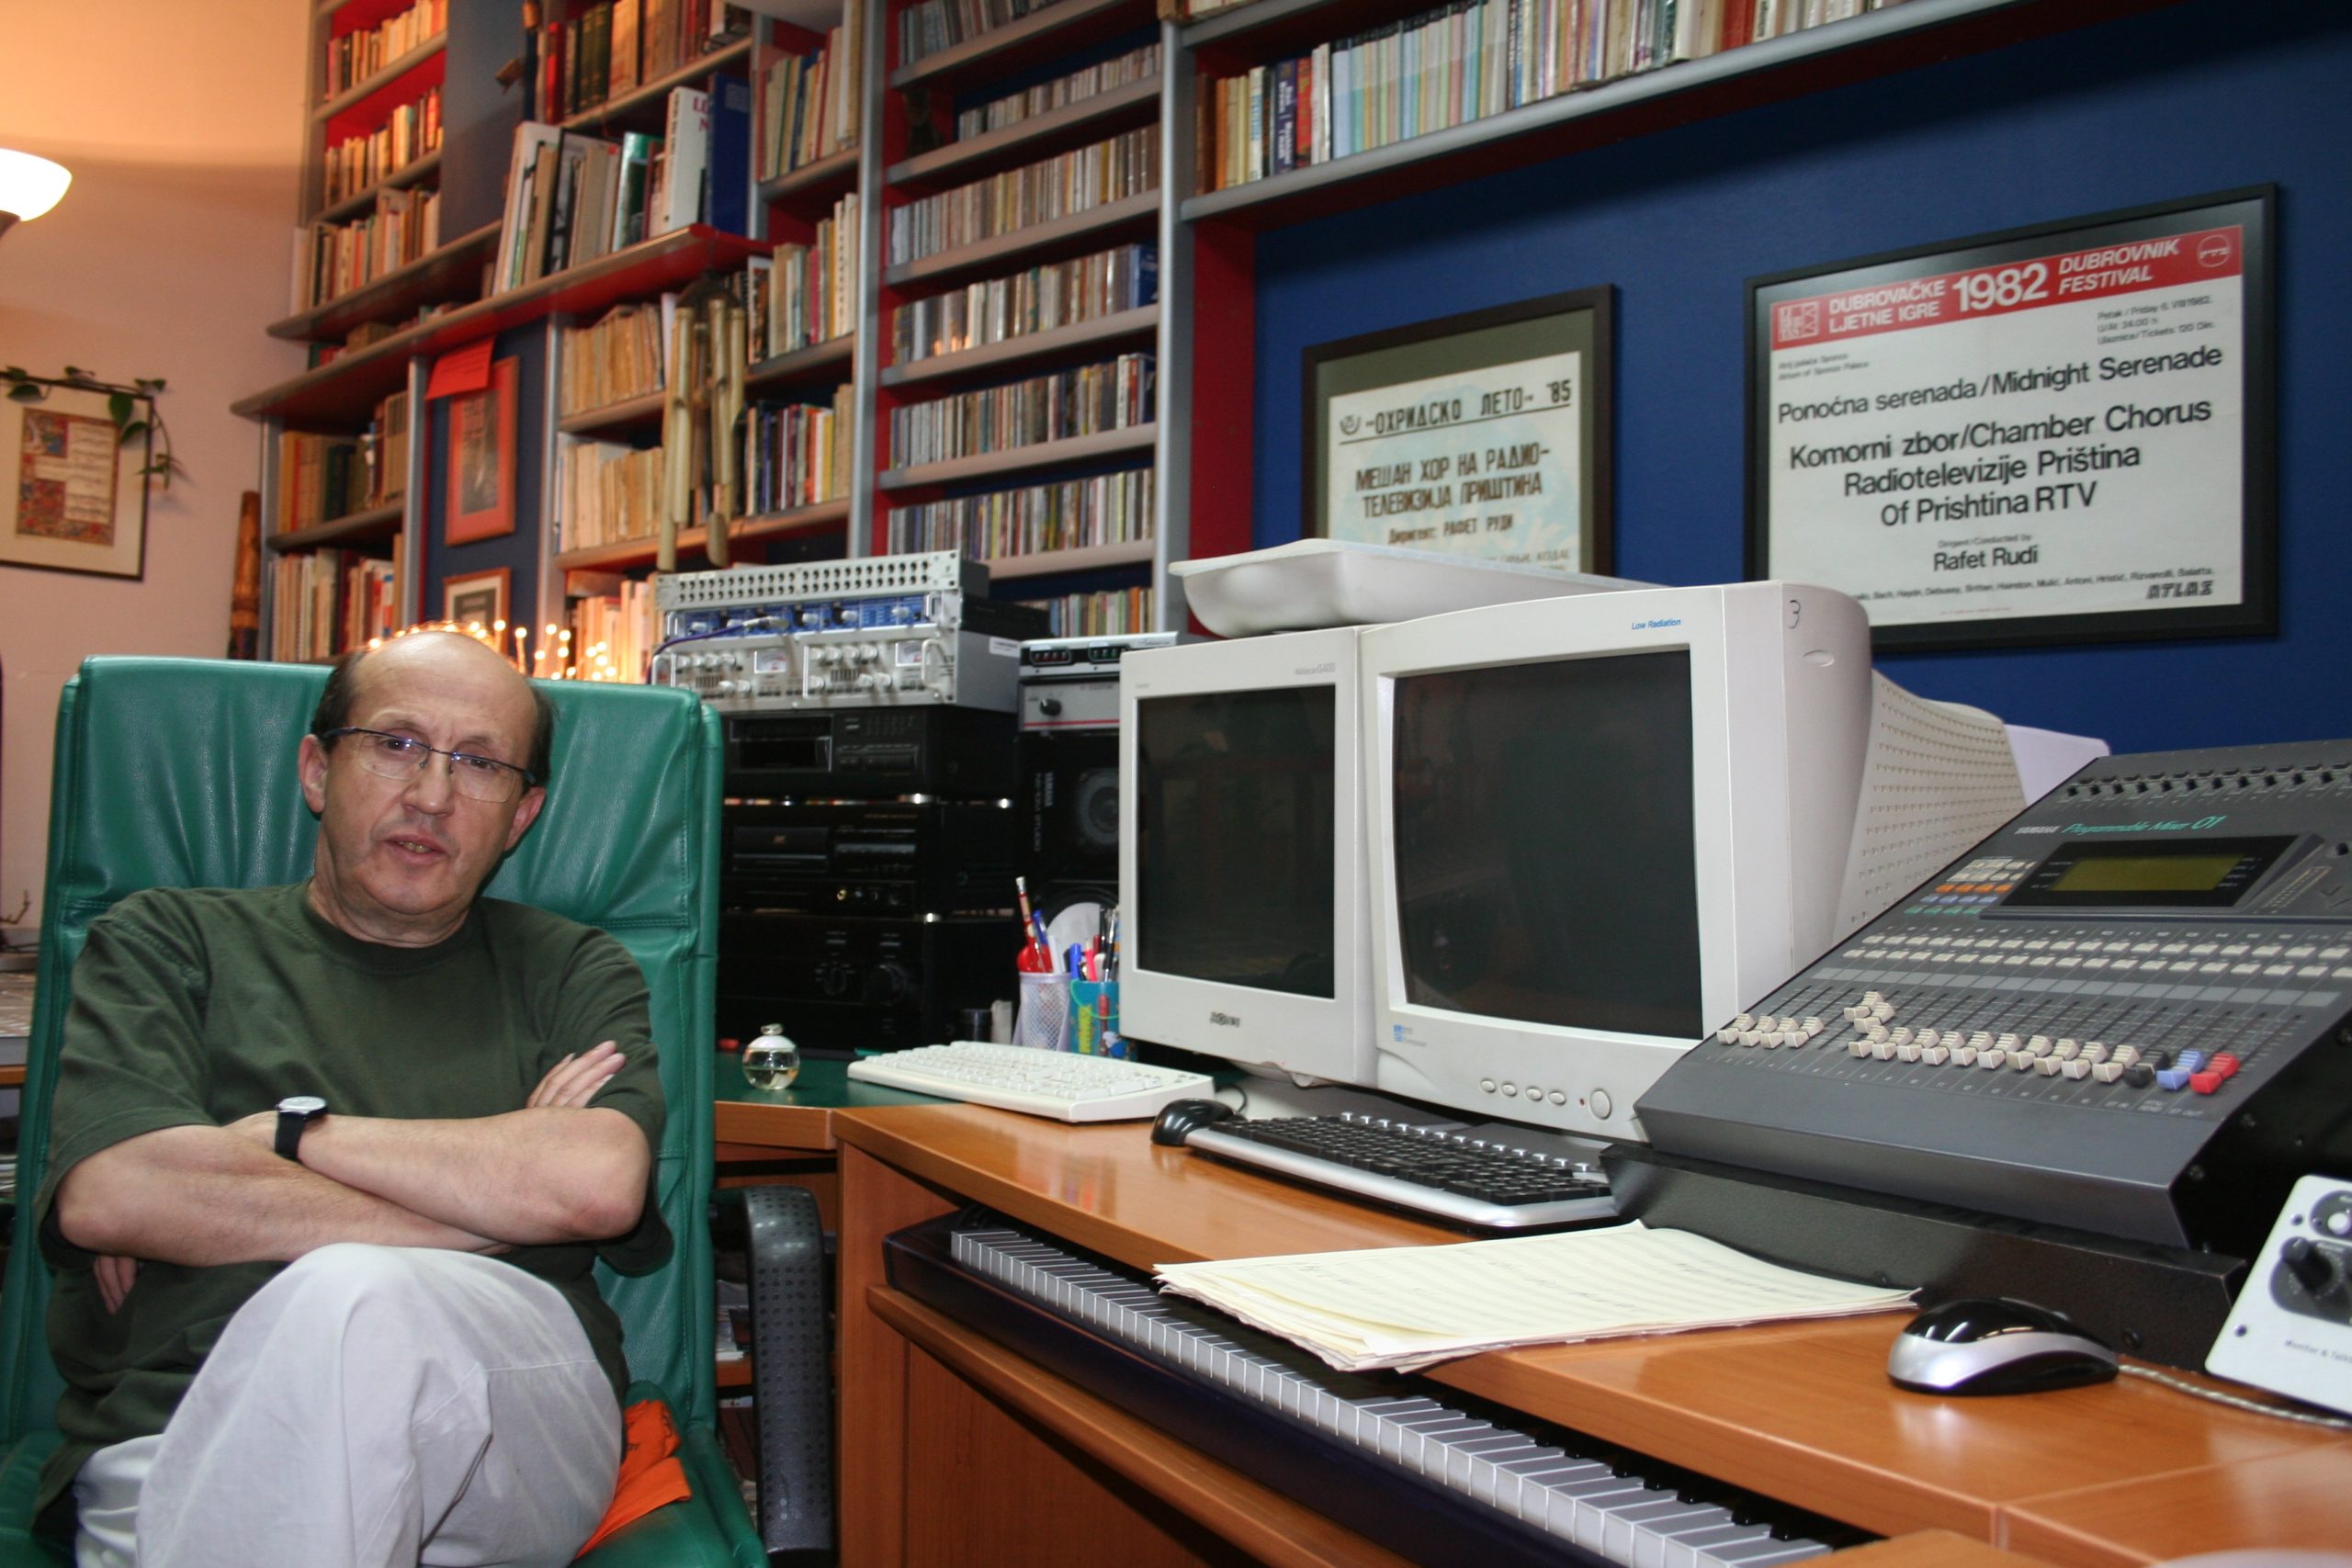 Rafet Rudi in his studio, 2006